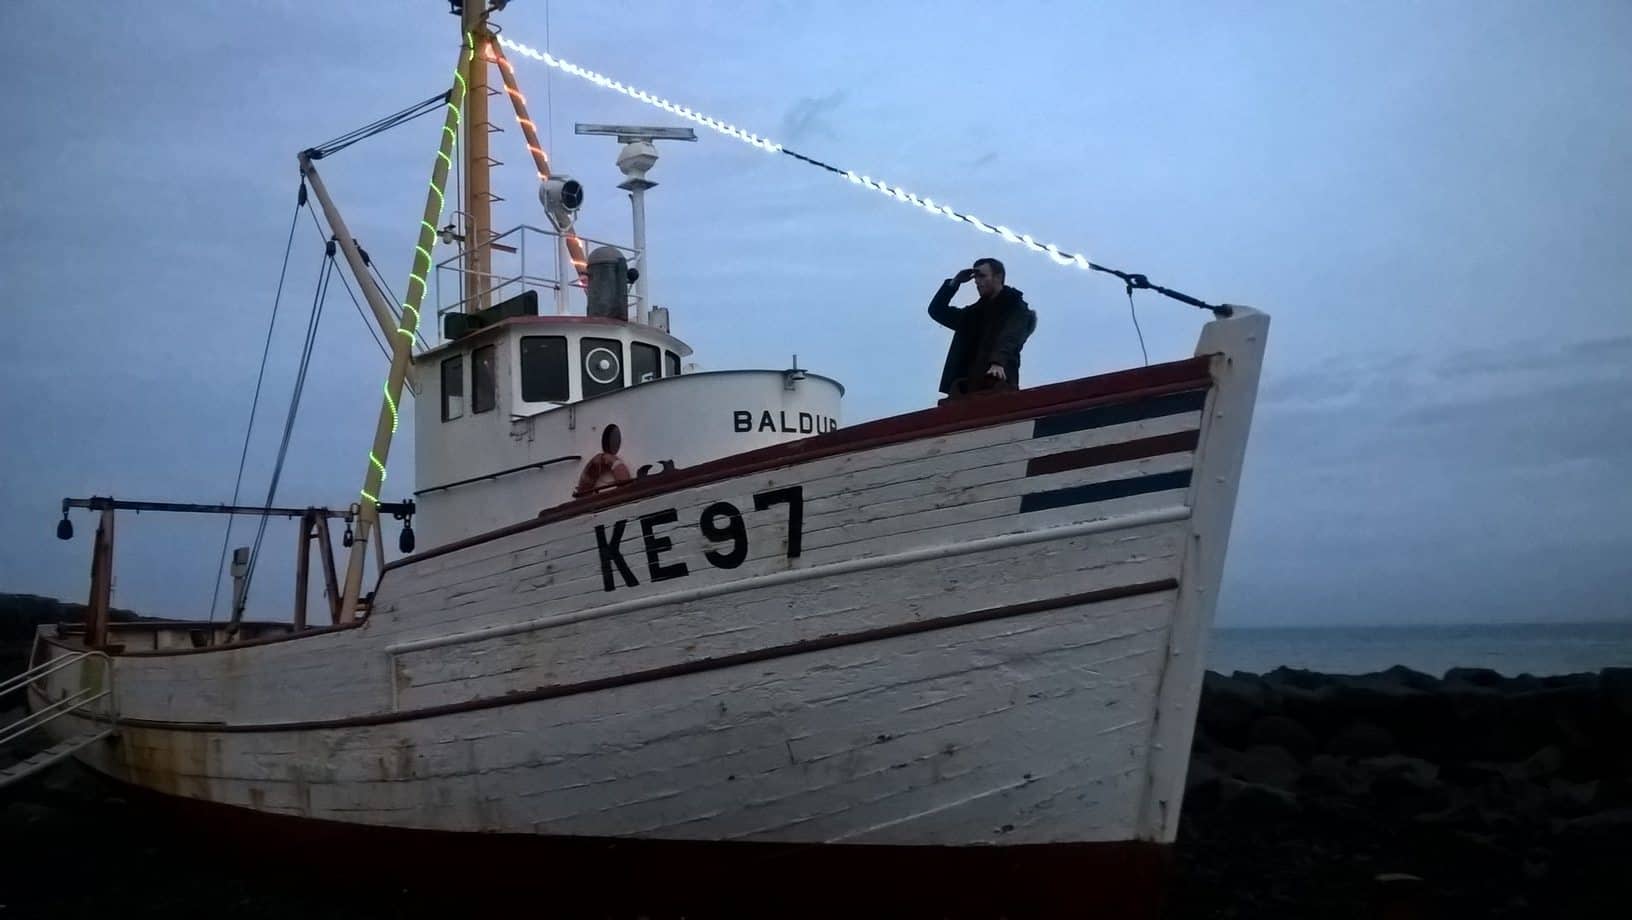 The boat Baldur in Iceland